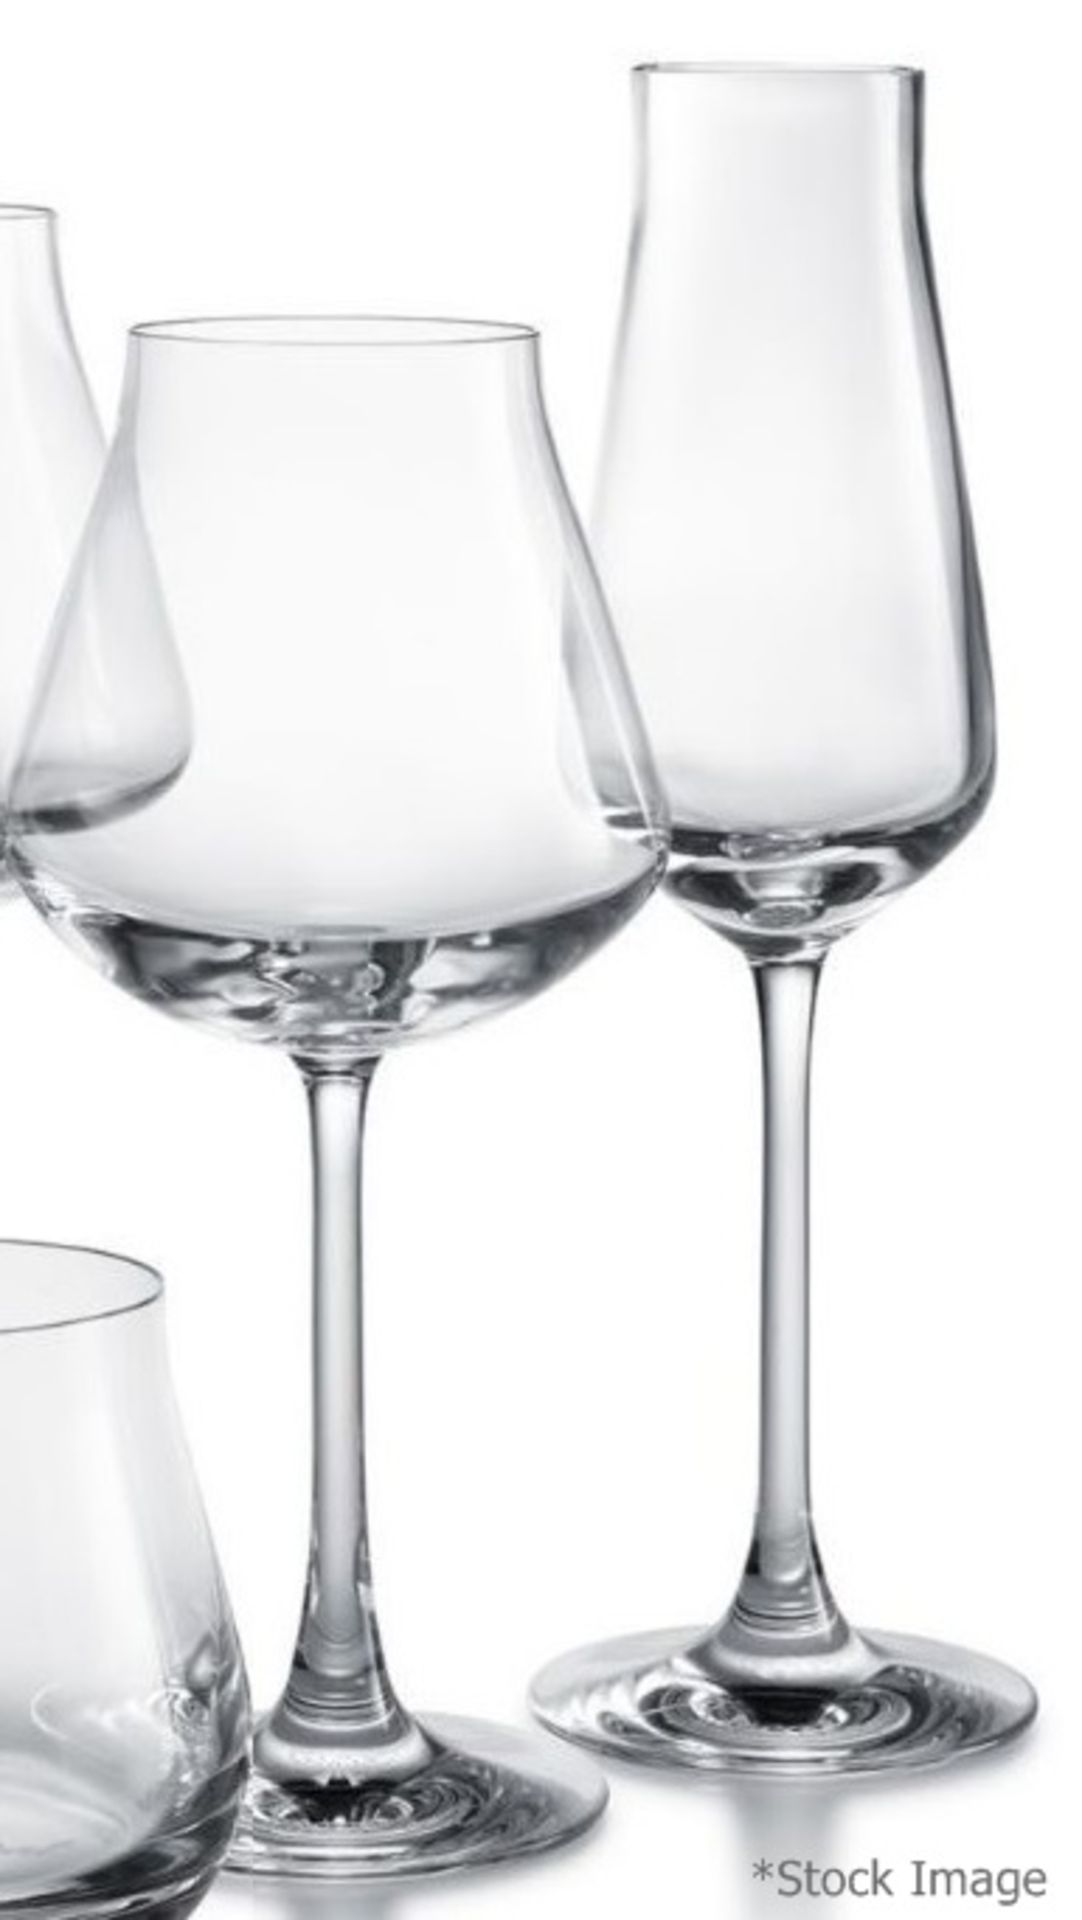 3 x Assorted BACCARAT 'Chateau Baccarat' Degustation Crystal Glasses - Original Total Value £180.